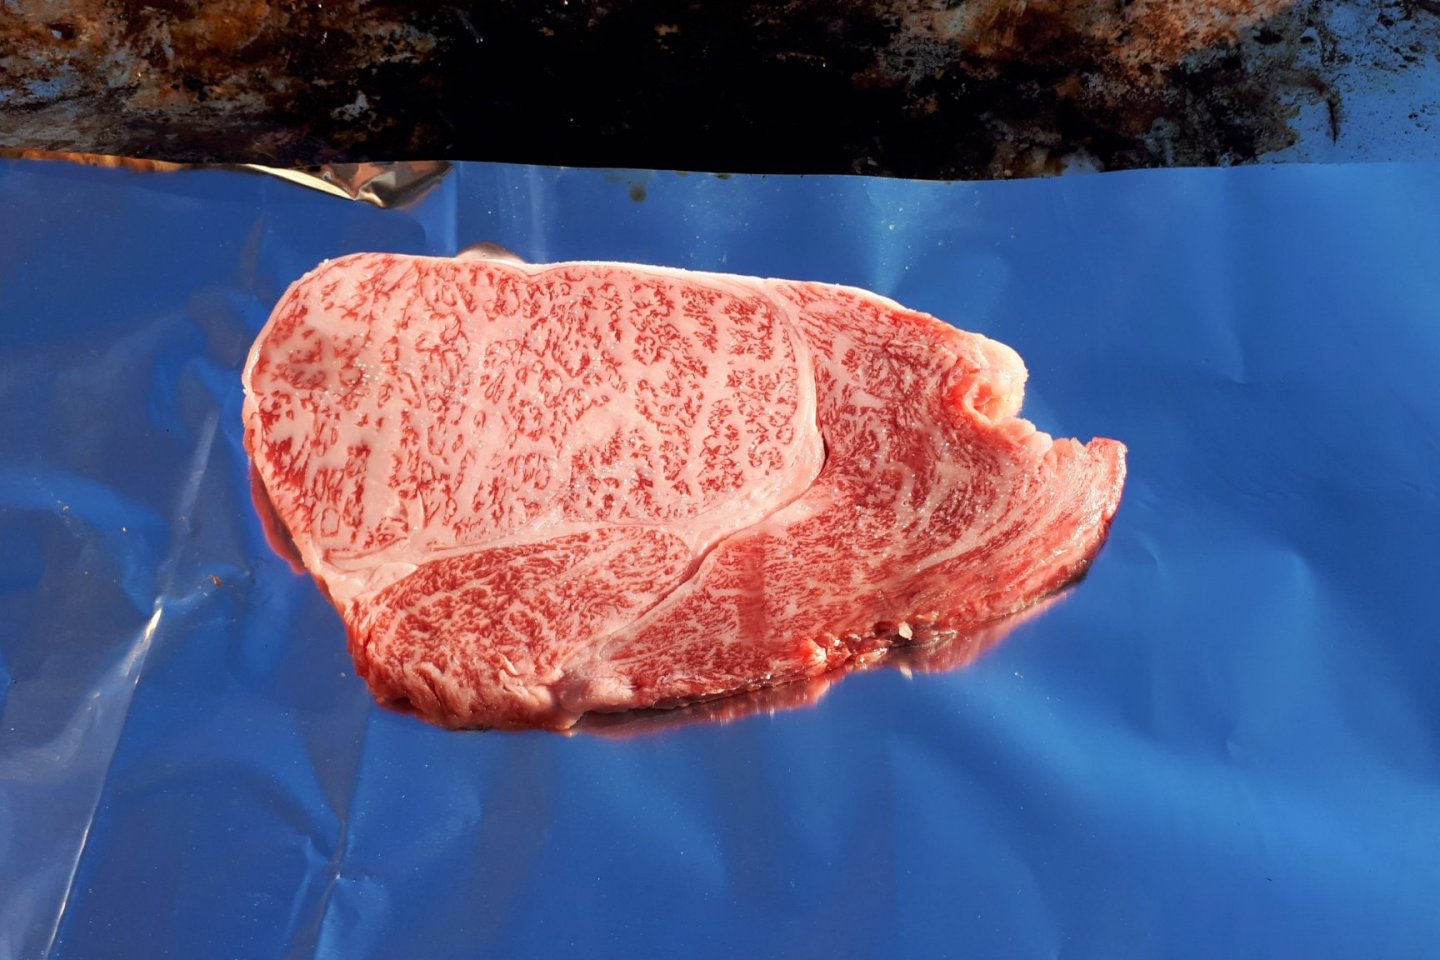 A few hundred grams of Ibaraki\'s famous Hitachi beef